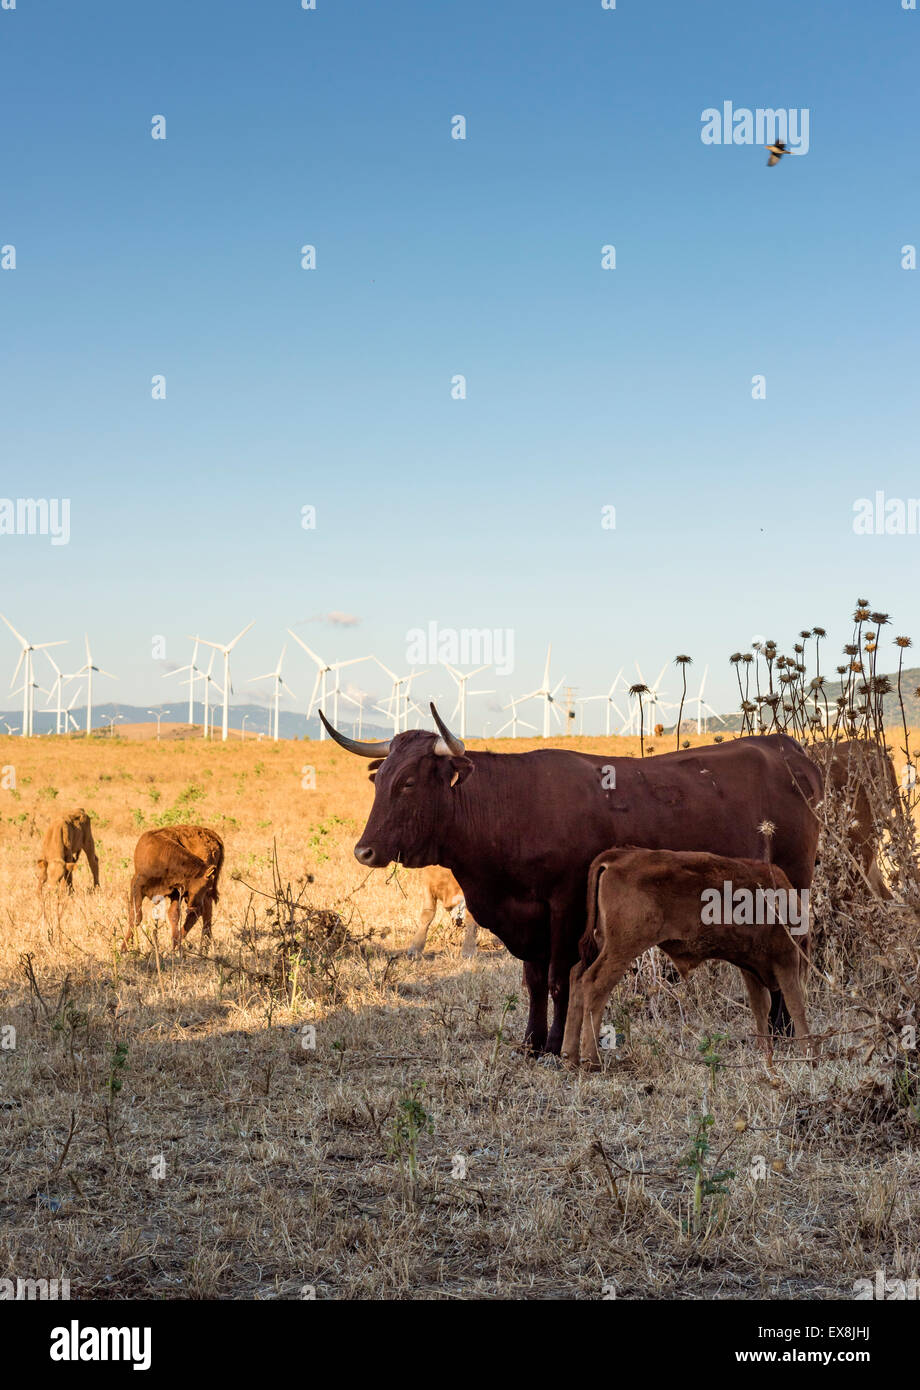 Cows in a field with windmills. Zahara de los Atunes, Tarifa, Cadiz, Andalusia, Southern Spain. Stock Photo